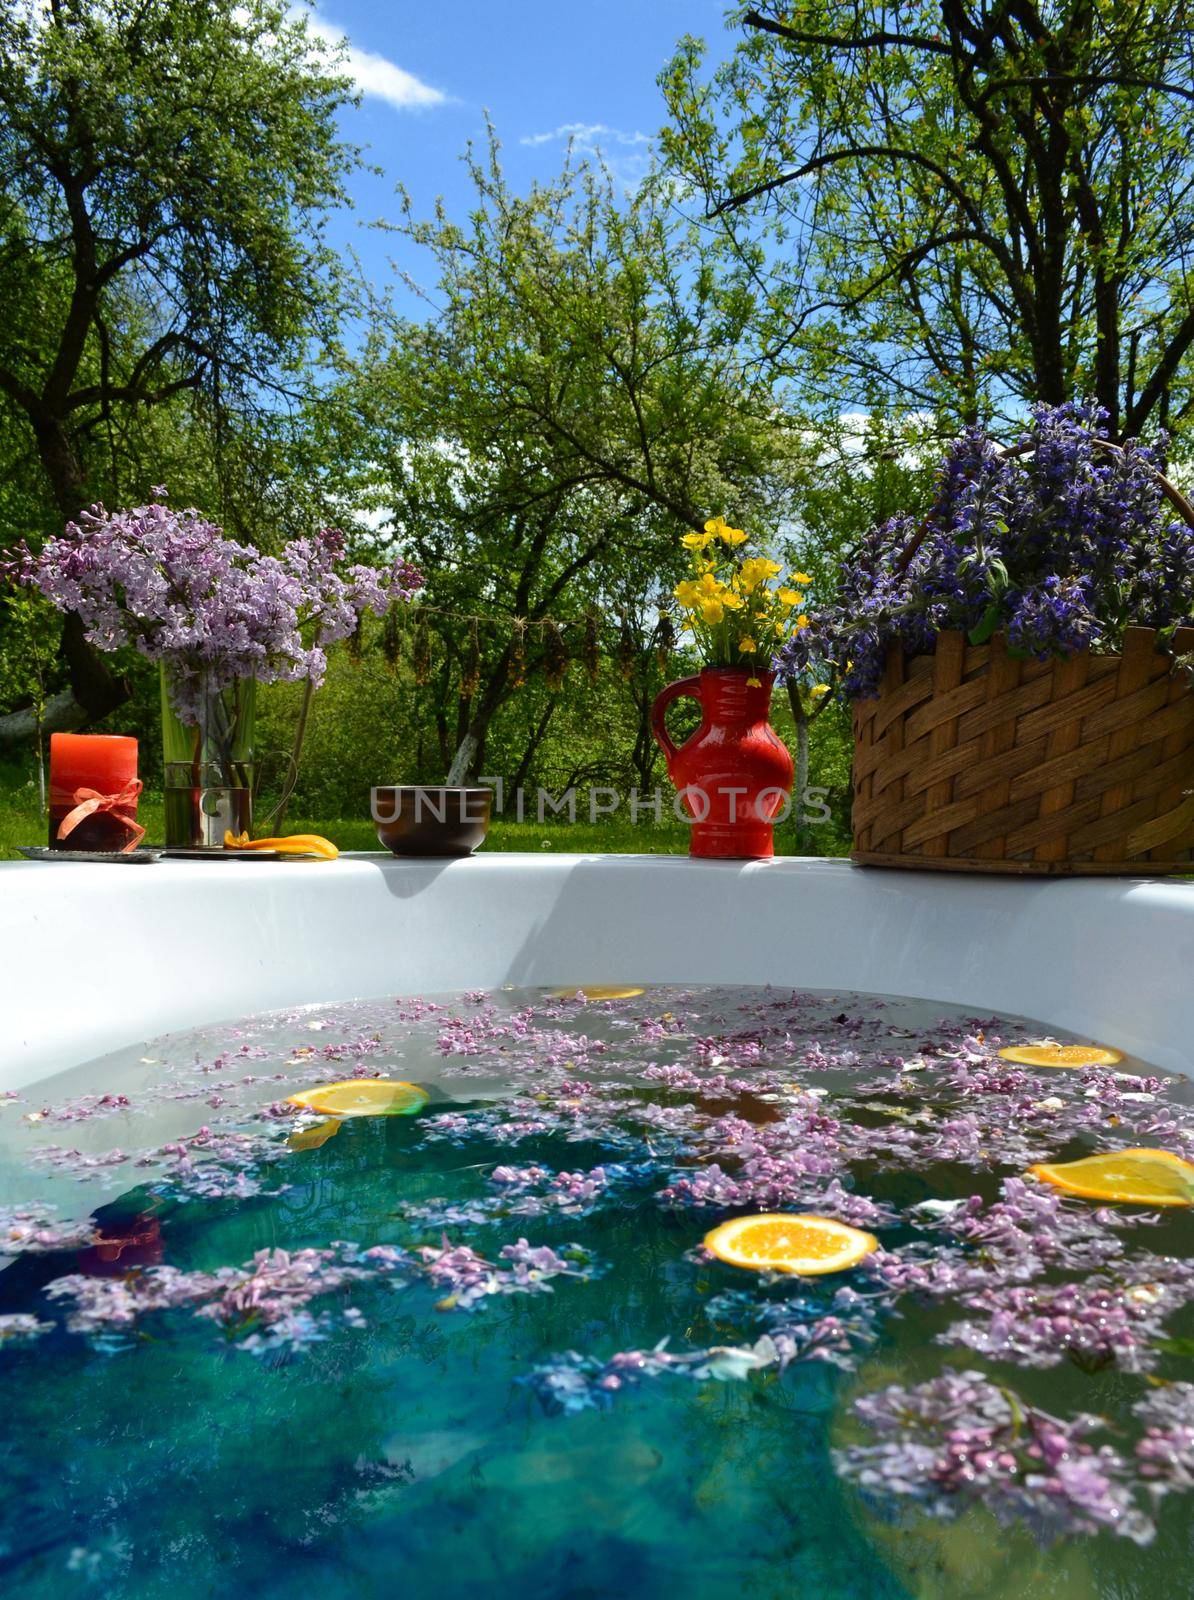 Lilac flowers and orange slice in a bathtub in a garden by hibrida13